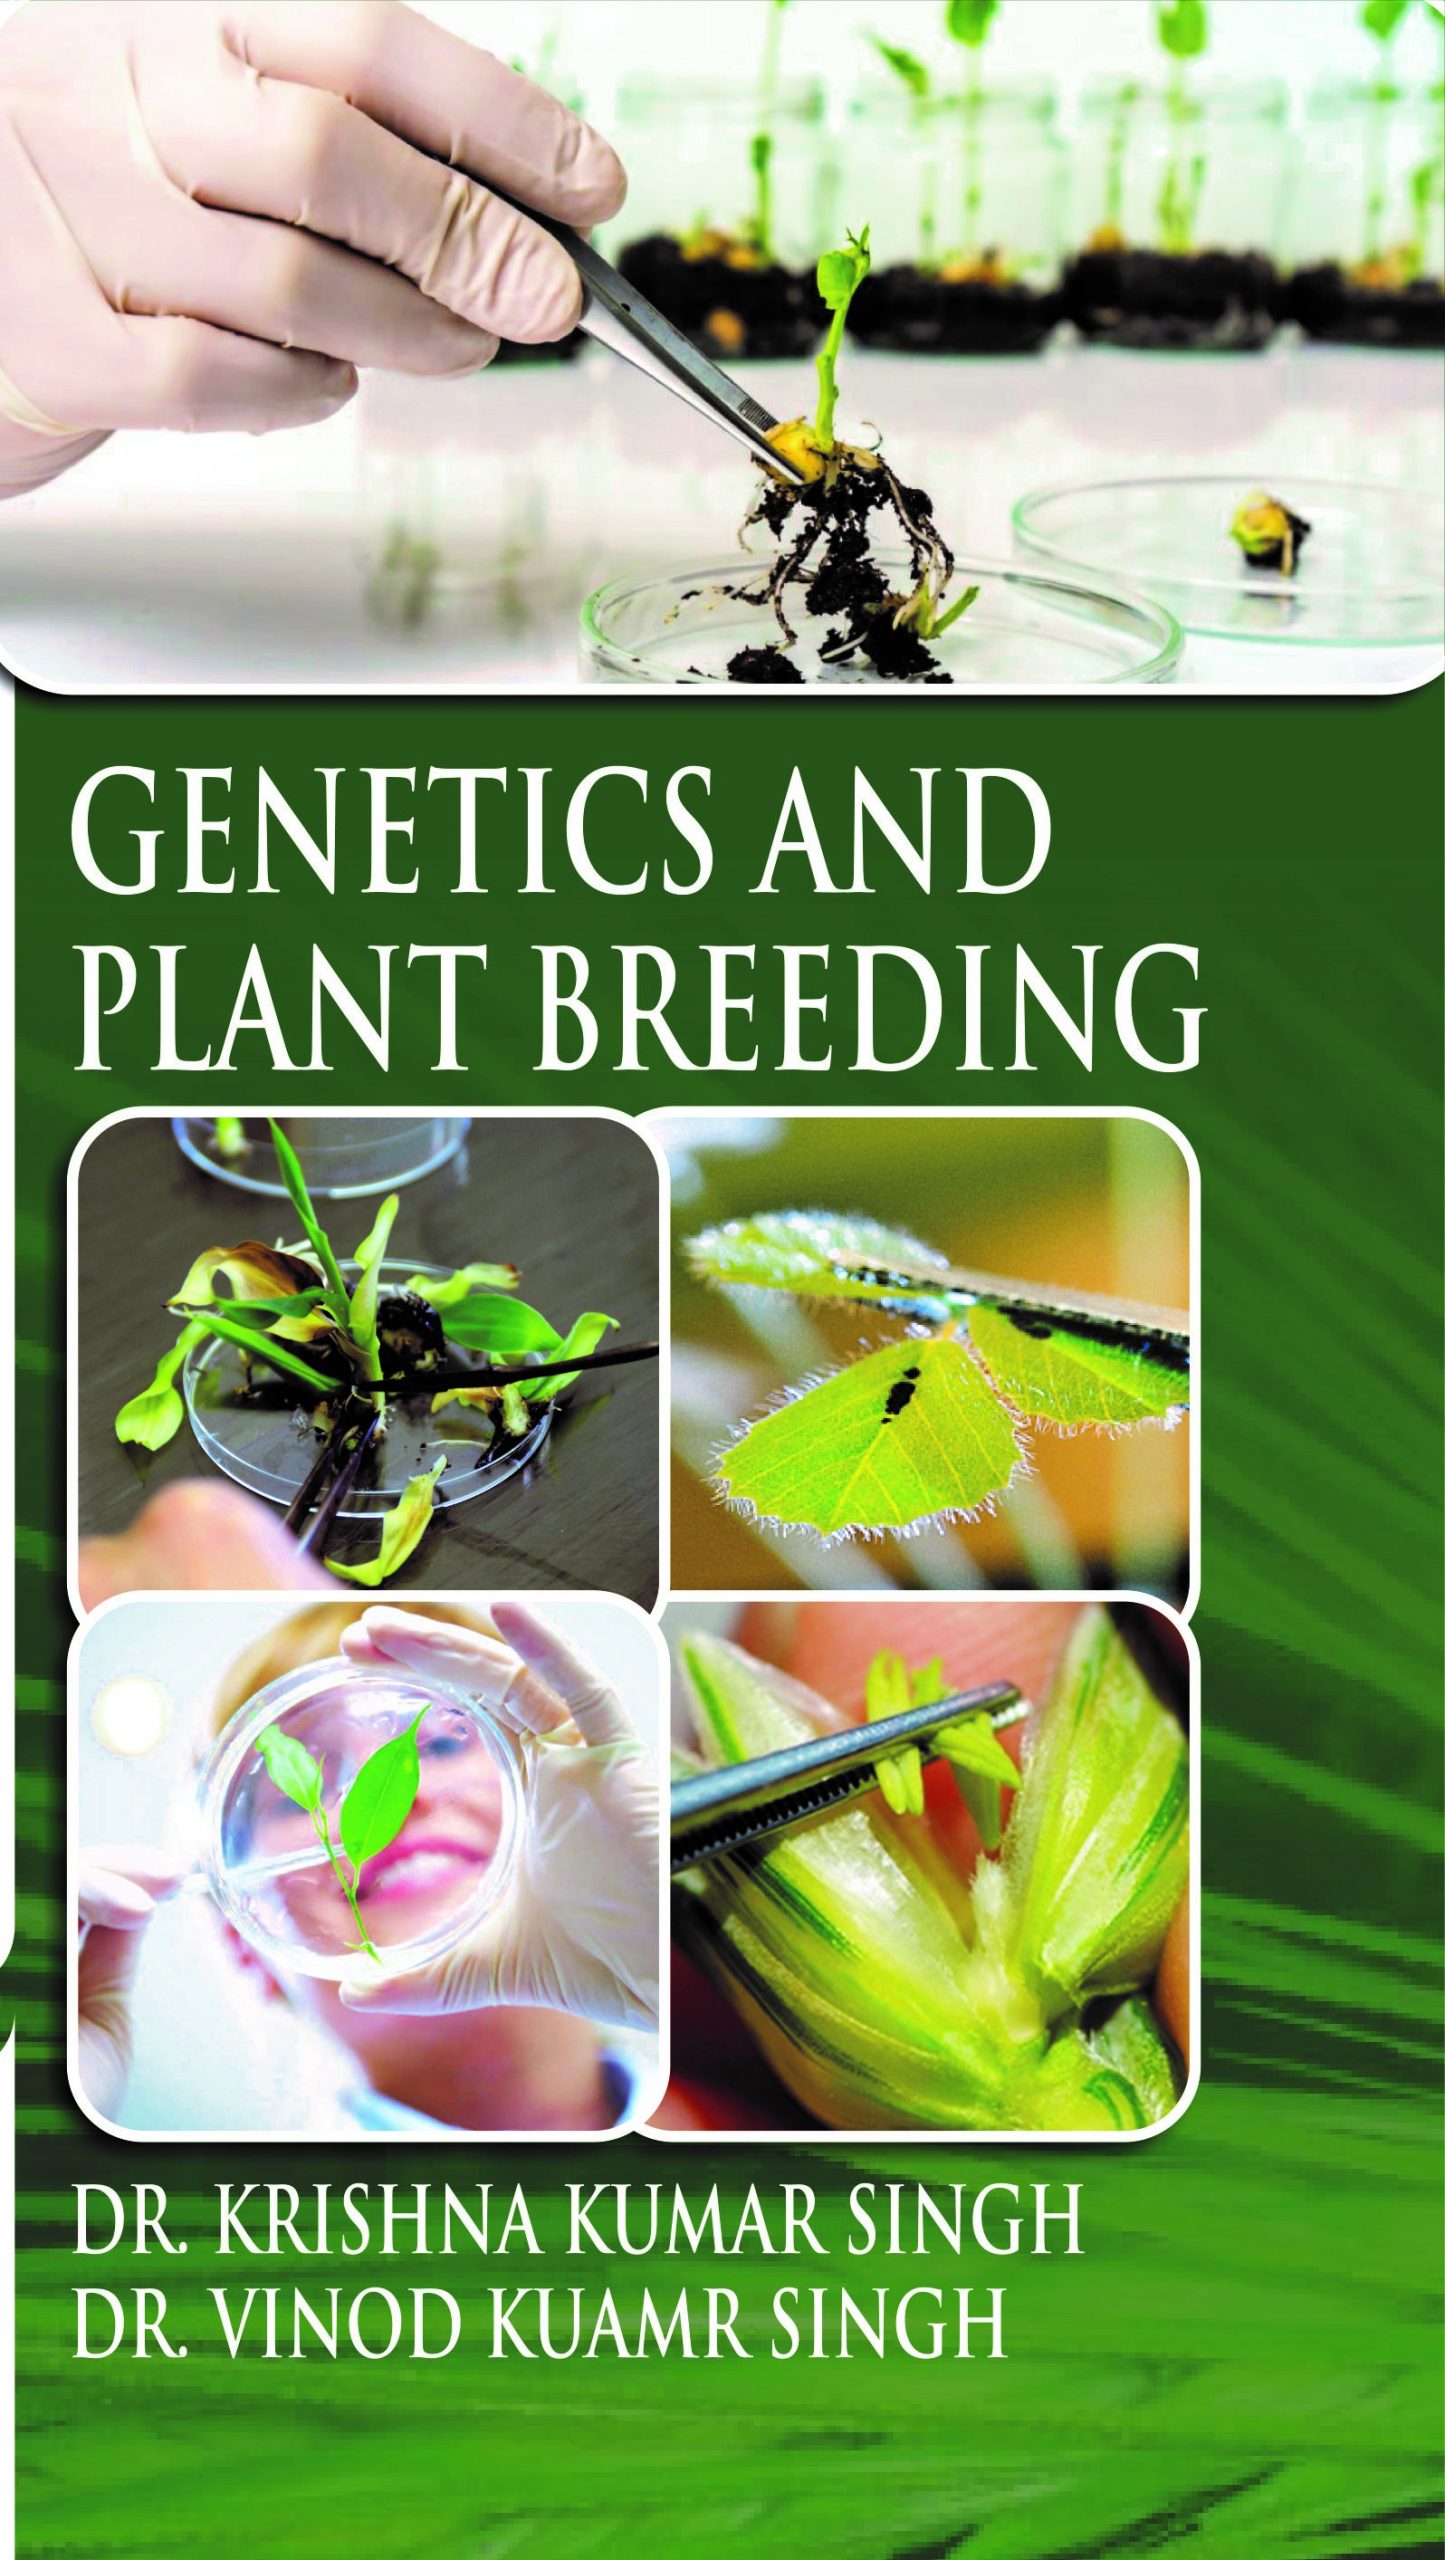 GENETICS AND PLANT BREEDING